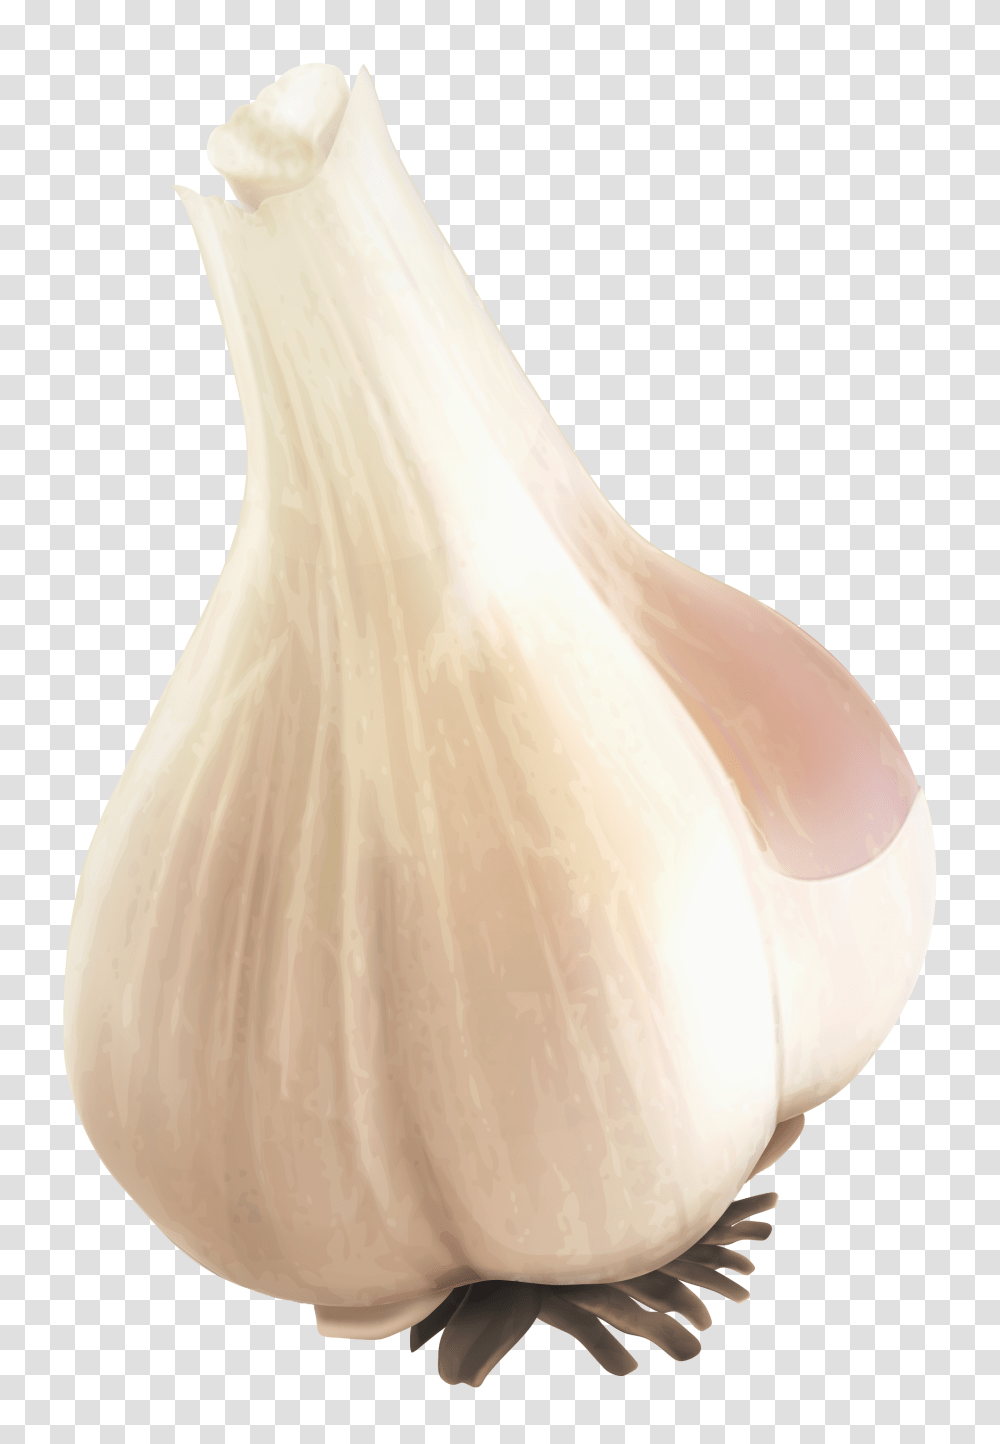 Garlic Image Garlic Desain, Plant, Vegetable, Food, Wedding Gown Transparent Png